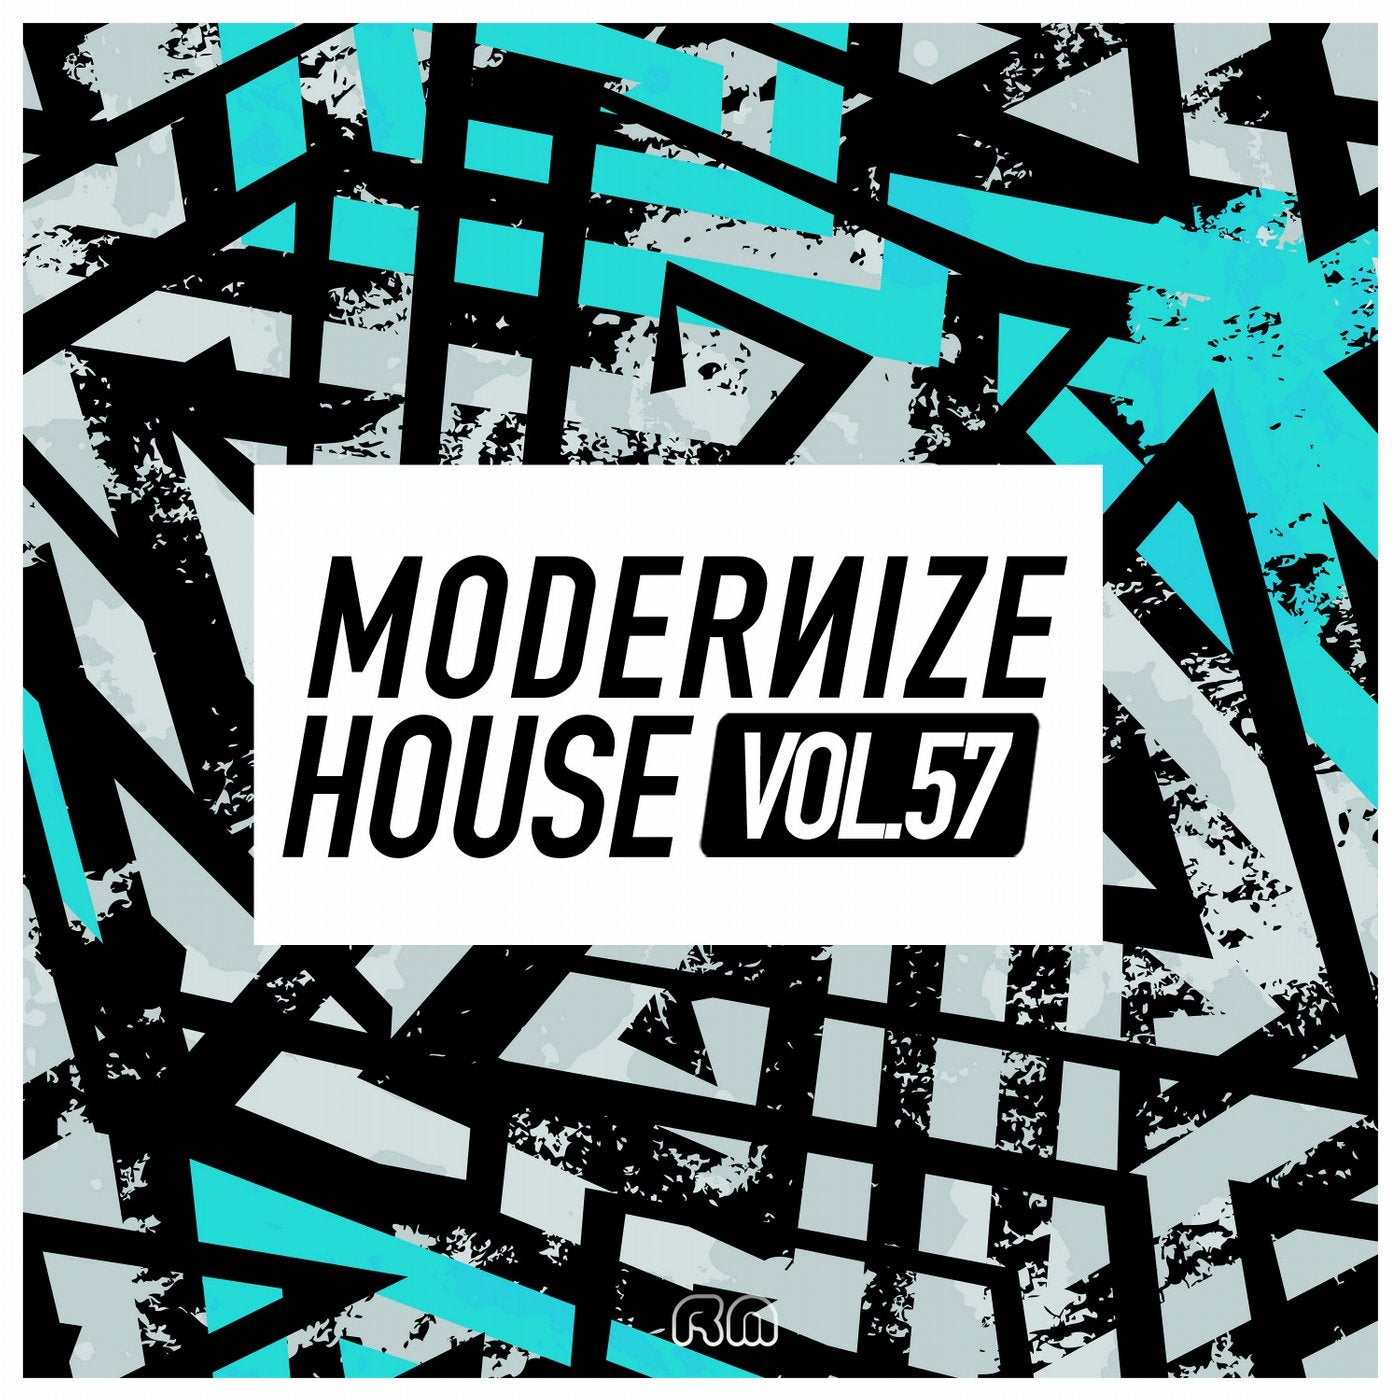 Modernize House Vol. 57